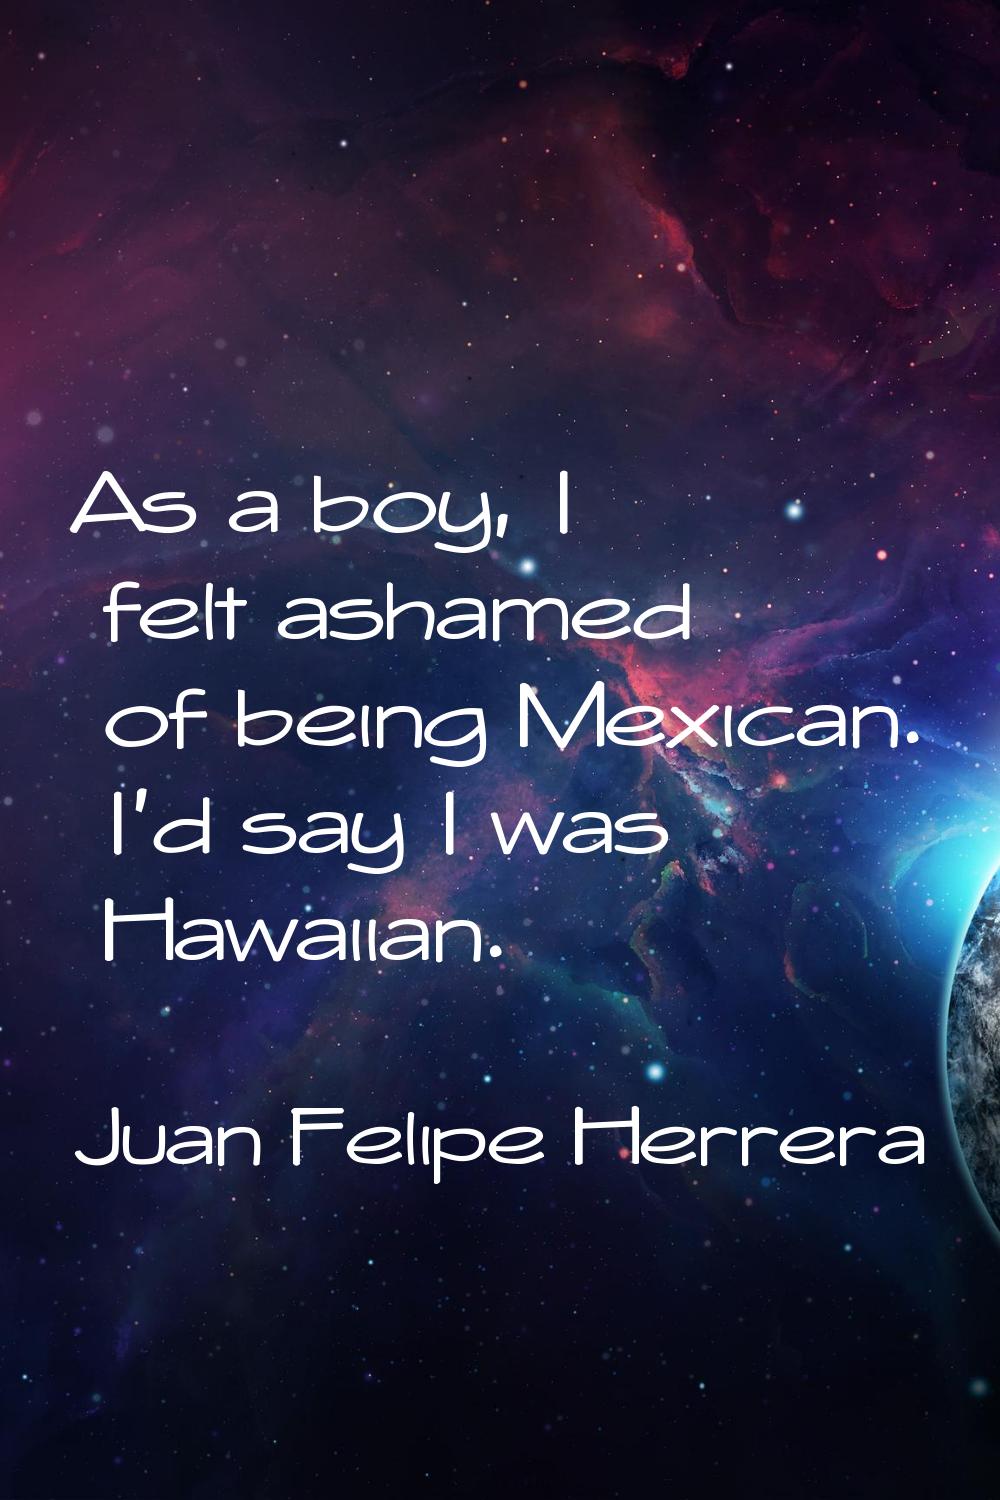 As a boy, I felt ashamed of being Mexican. I'd say I was Hawaiian.